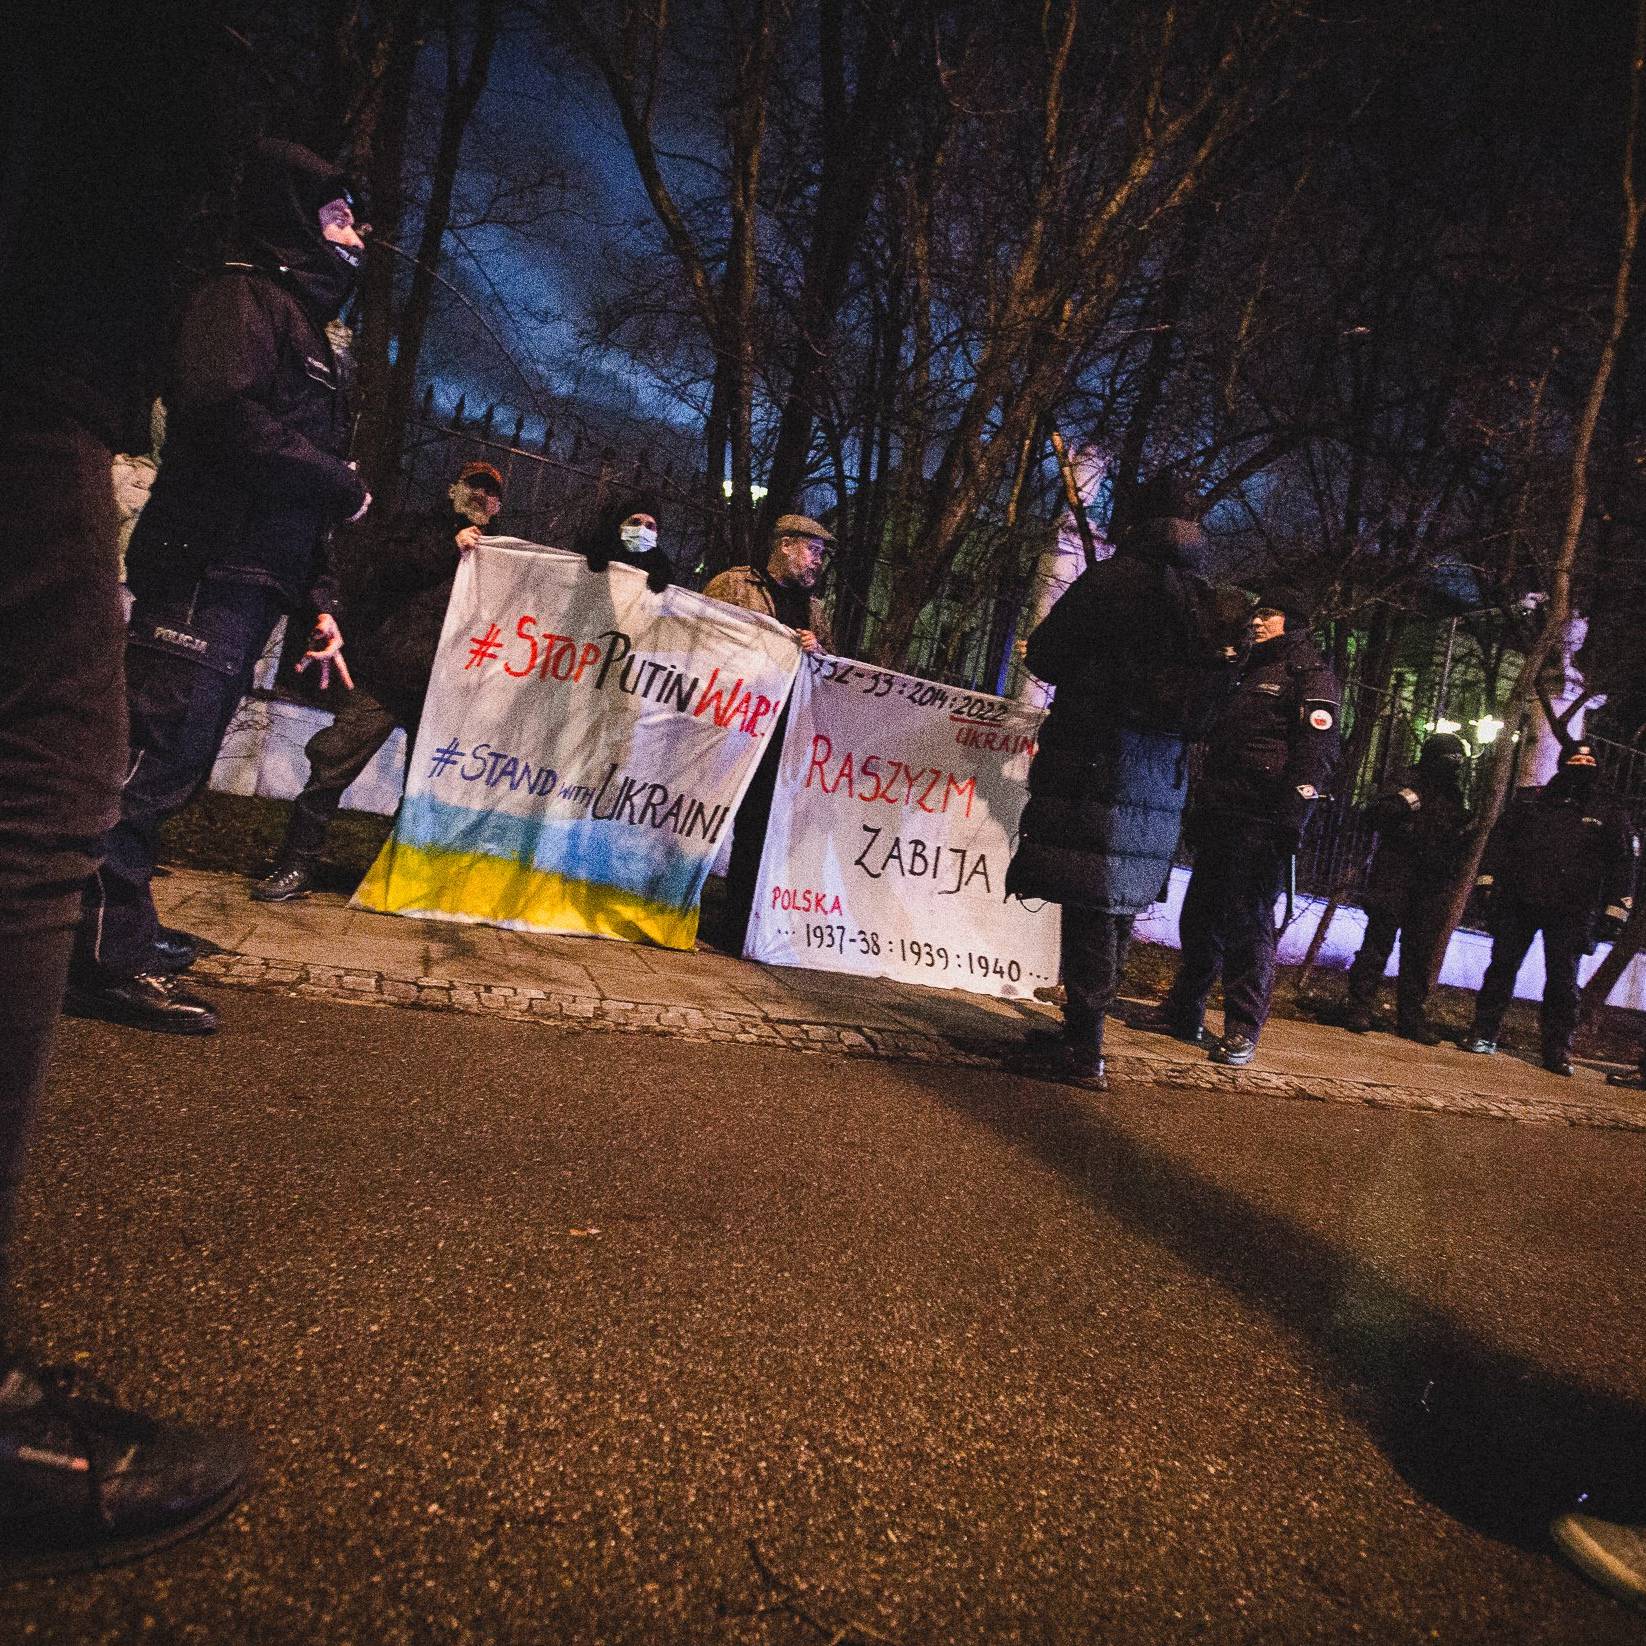 Warszawa, 23.02.2022. „Stop Puitin wars, stand with Ukraine”. Protest pod ambasadą Rosji